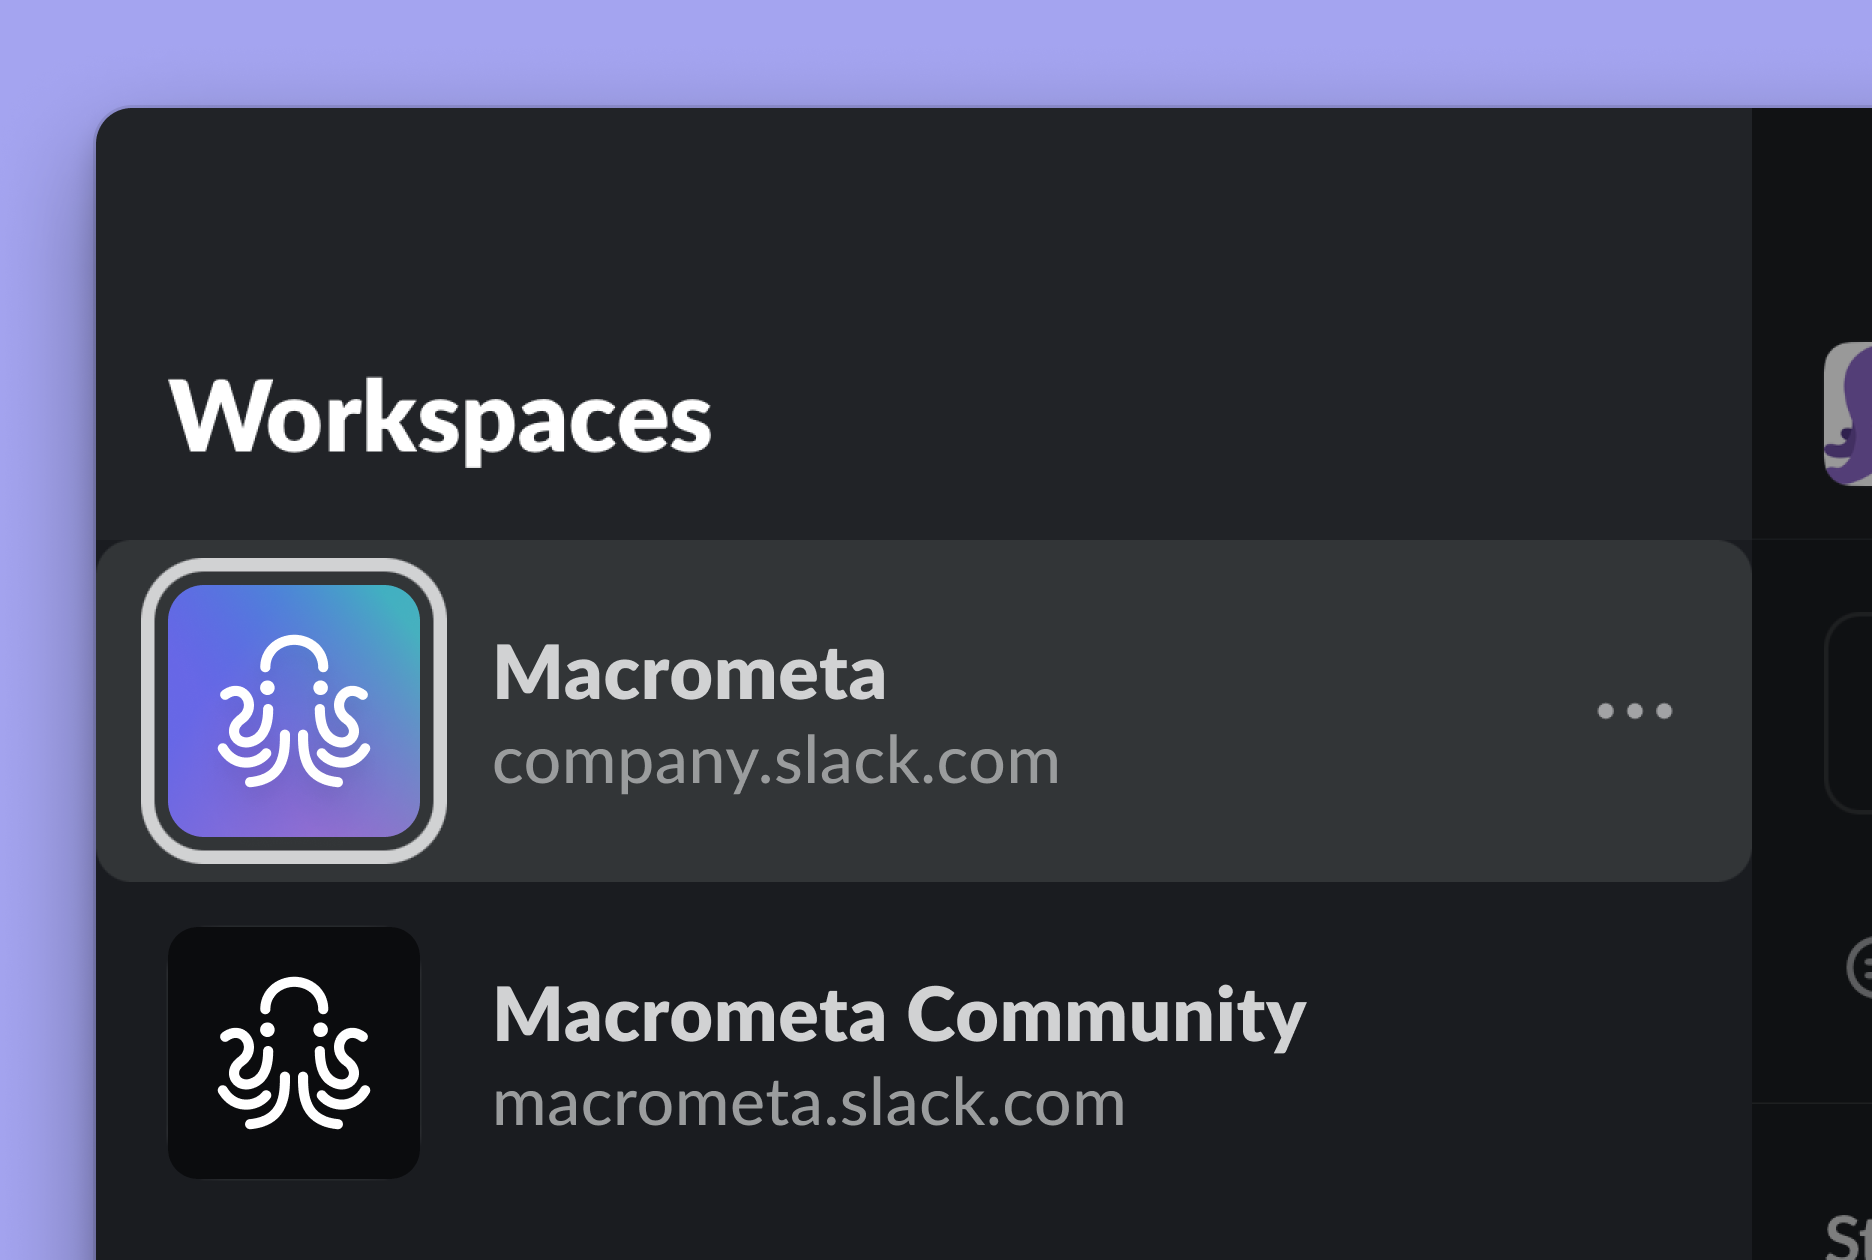 Macrometa Slack icons